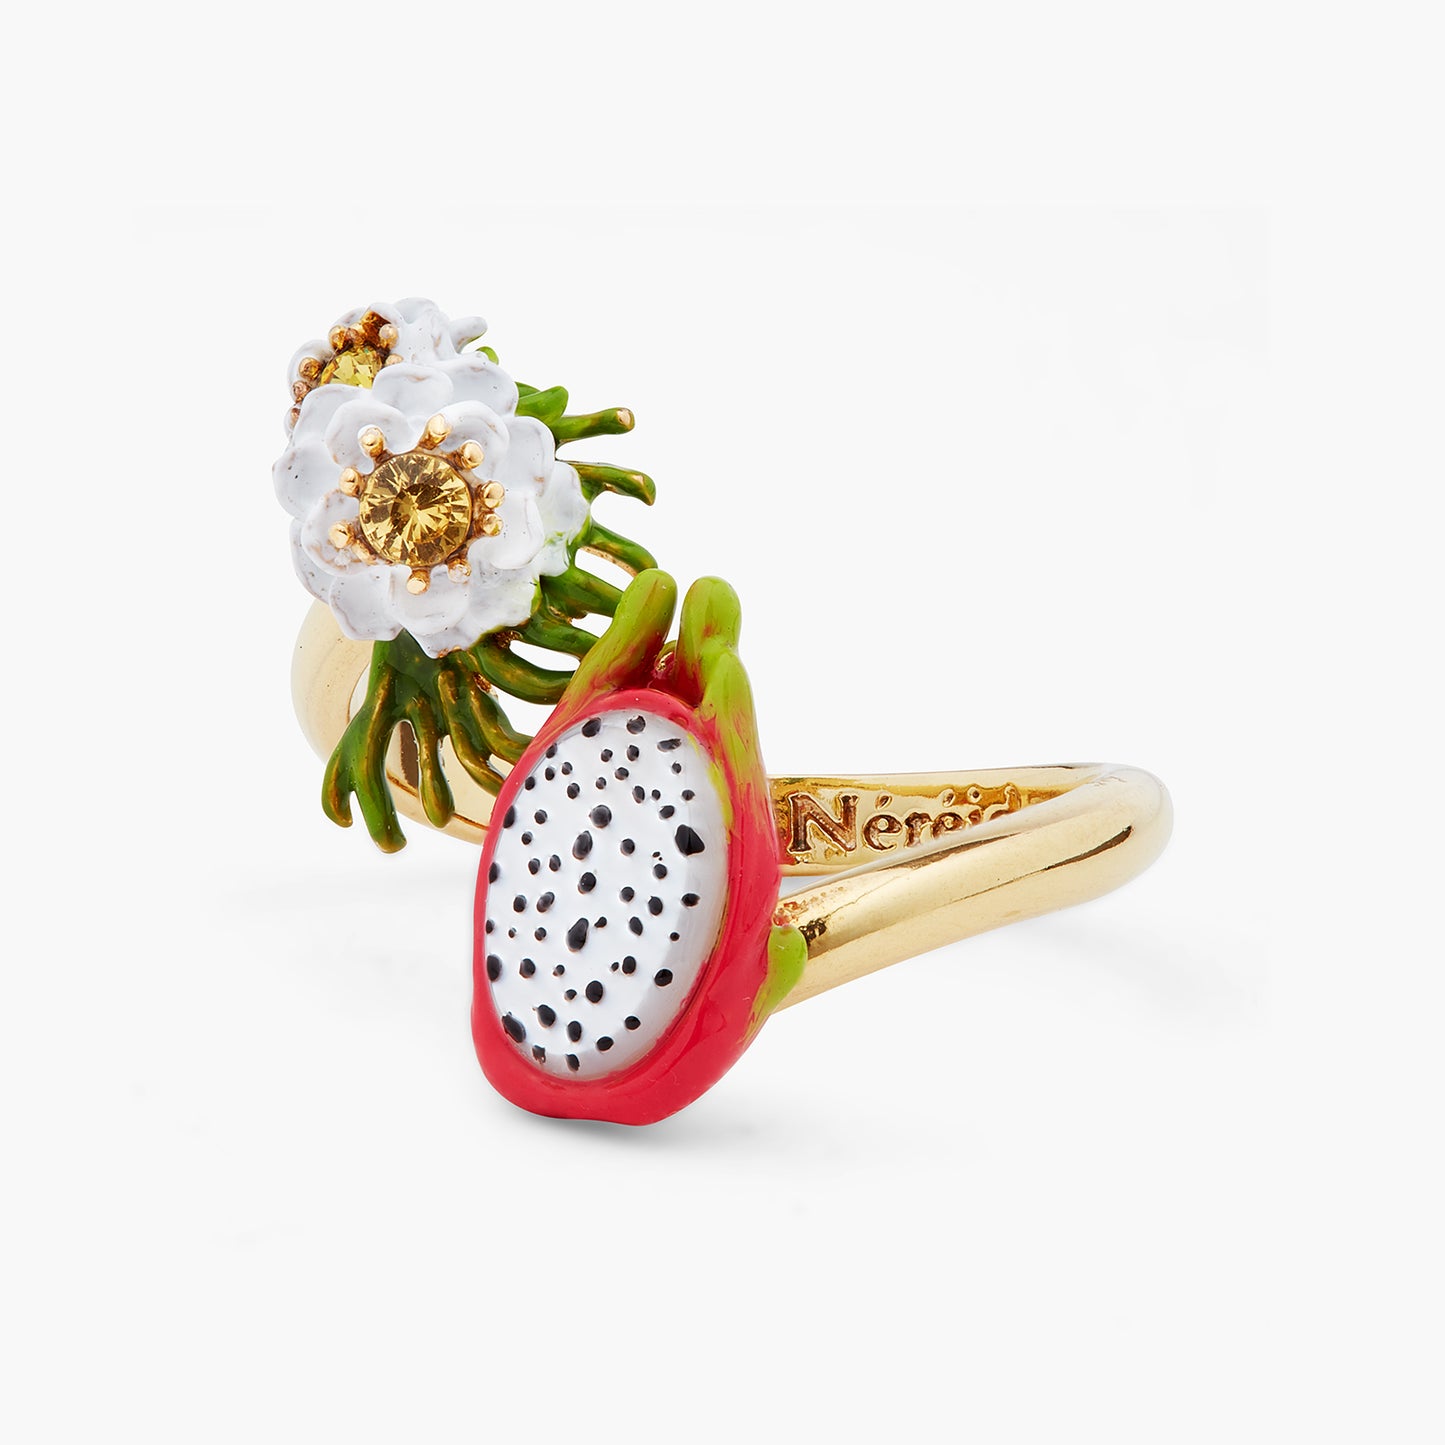 Dragon Fruit And Pitaya Flower You And Me Adjustable Ring | ARPA6031